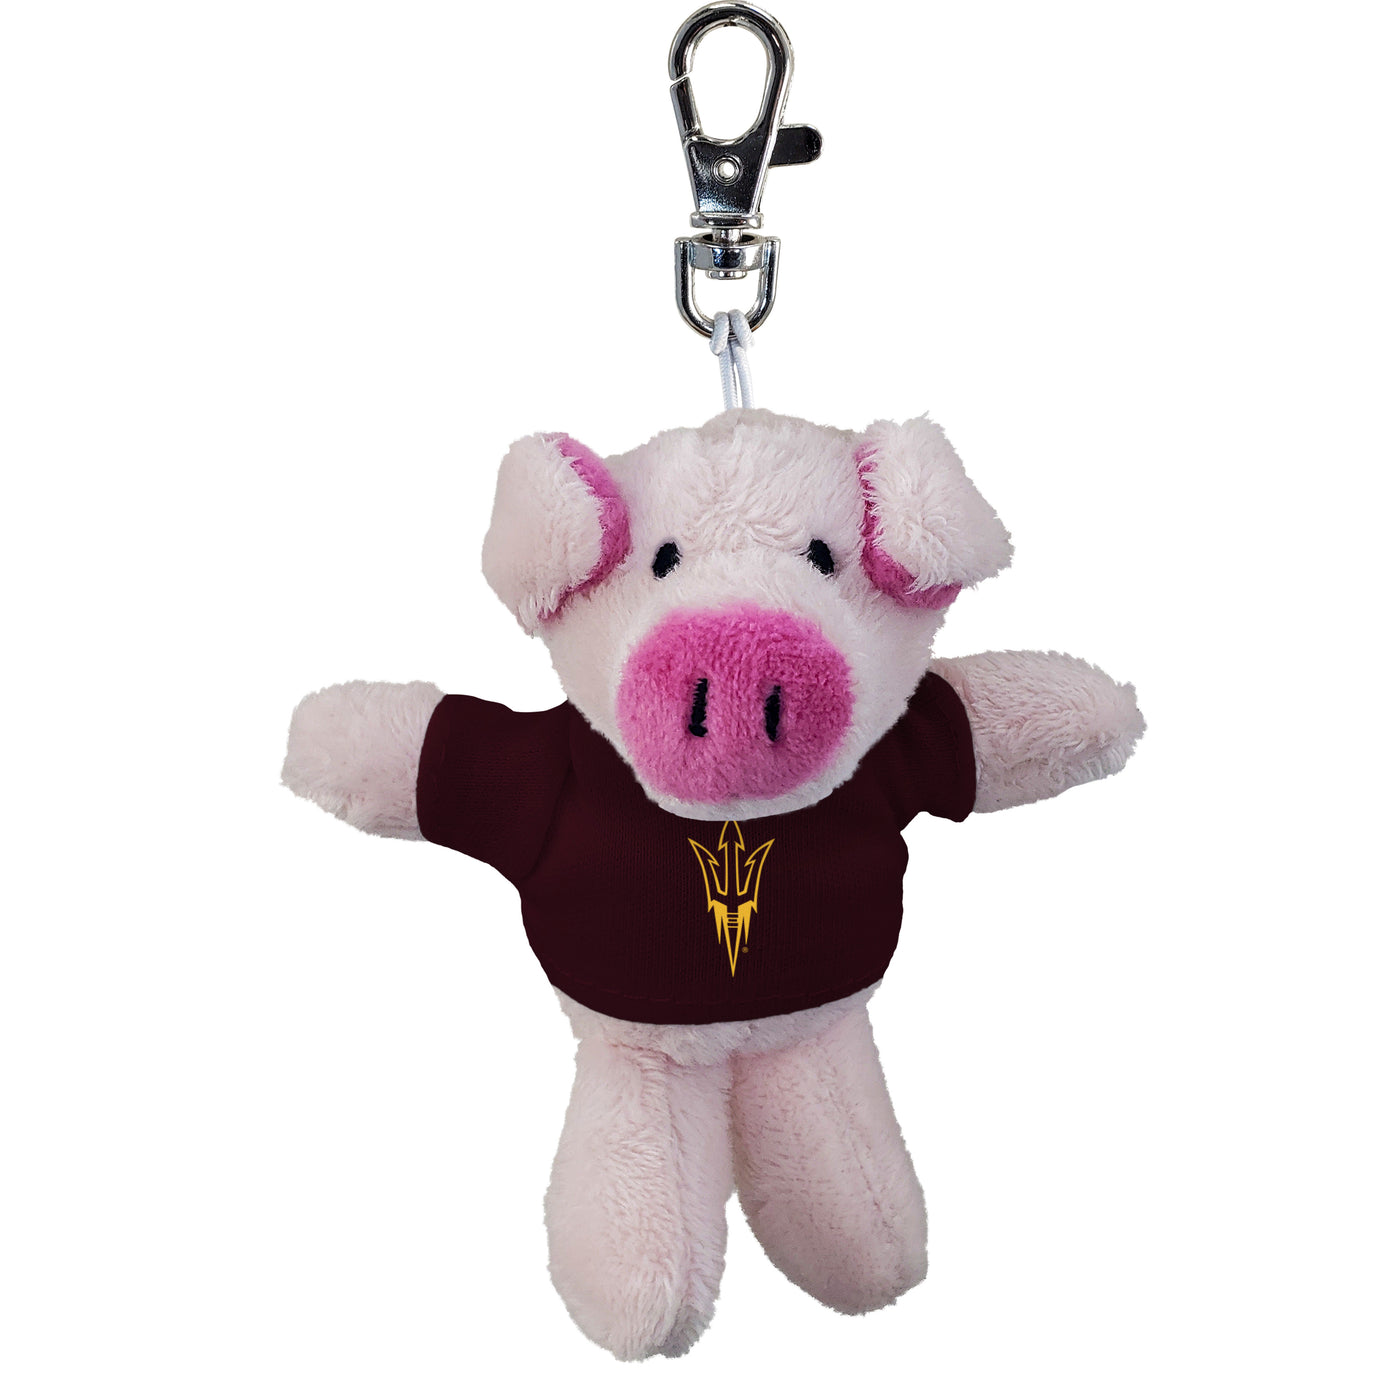 ASU stuffed pink pig keychain wearing a maroon shirt with a gold pitchfork logo. 